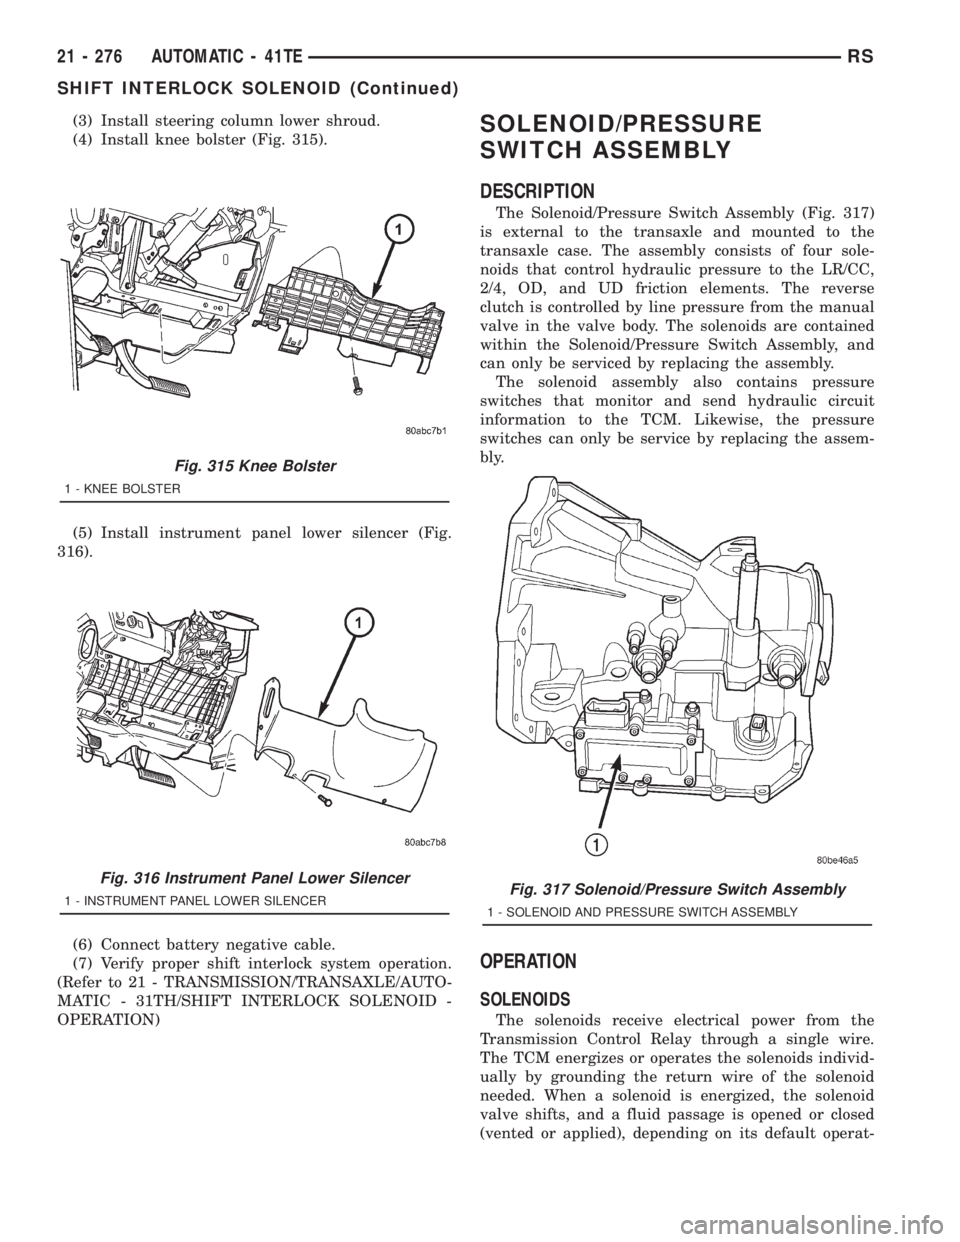 CHRYSLER VOYAGER 2001 Workshop Manual (3) Install steering column lower shroud.
(4) Install knee bolster (Fig. 315).
(5) Install instrument panel lower silencer (Fig.
316).
(6) Connect battery negative cable.
(7) Verify proper shift inter